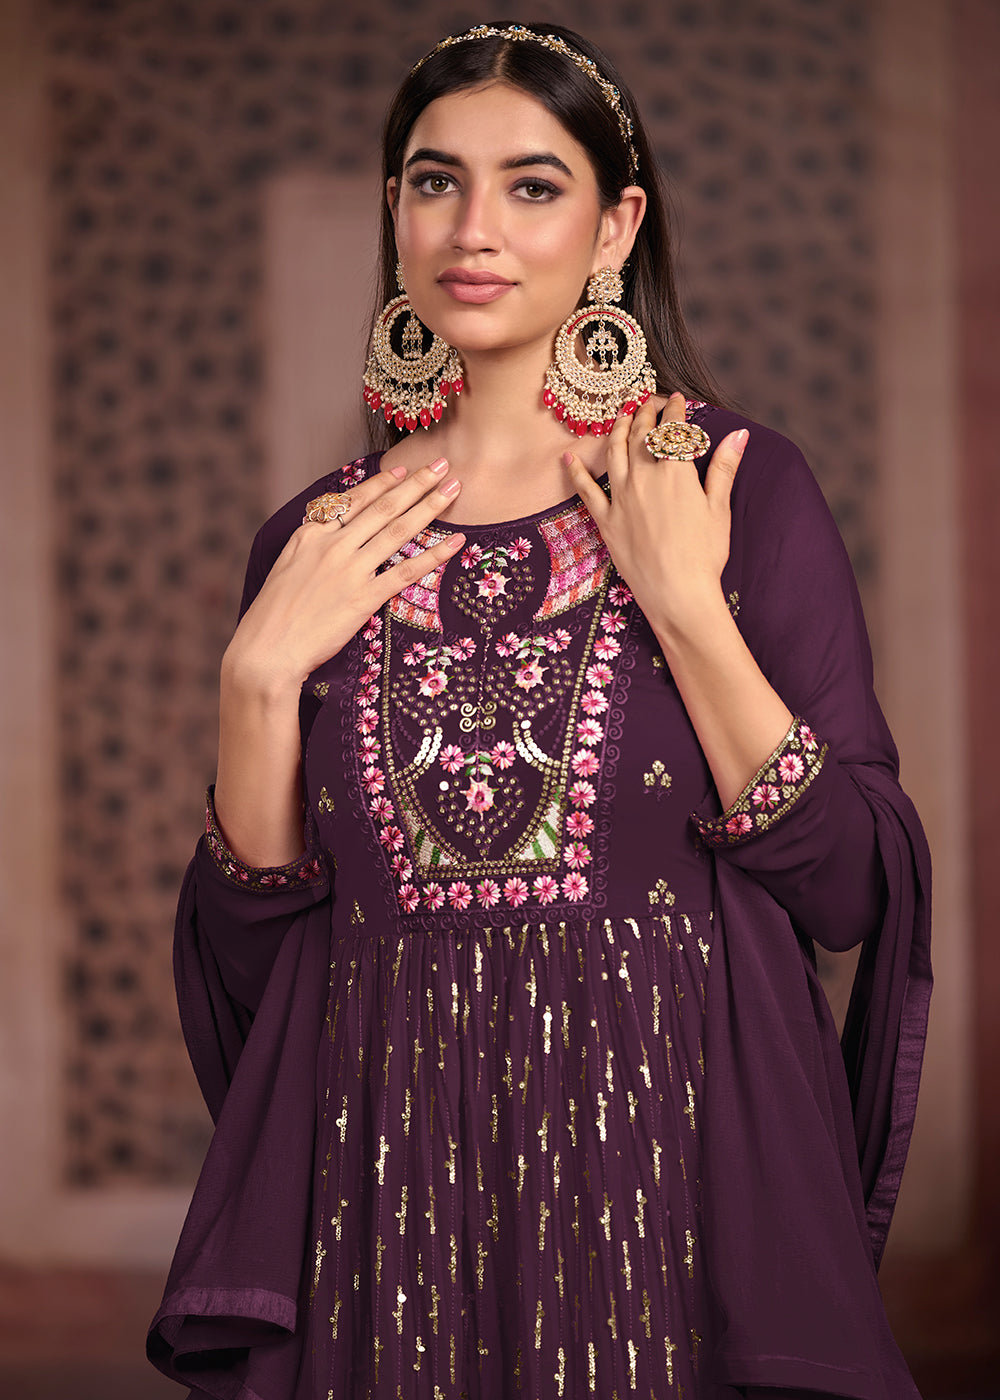 Buy Now Nyra Cut Style Elegant Purple Festive Palazzo Suit Online in USA, UK, Canada, Germany, Australia & Worldwide at Empress Clothing.